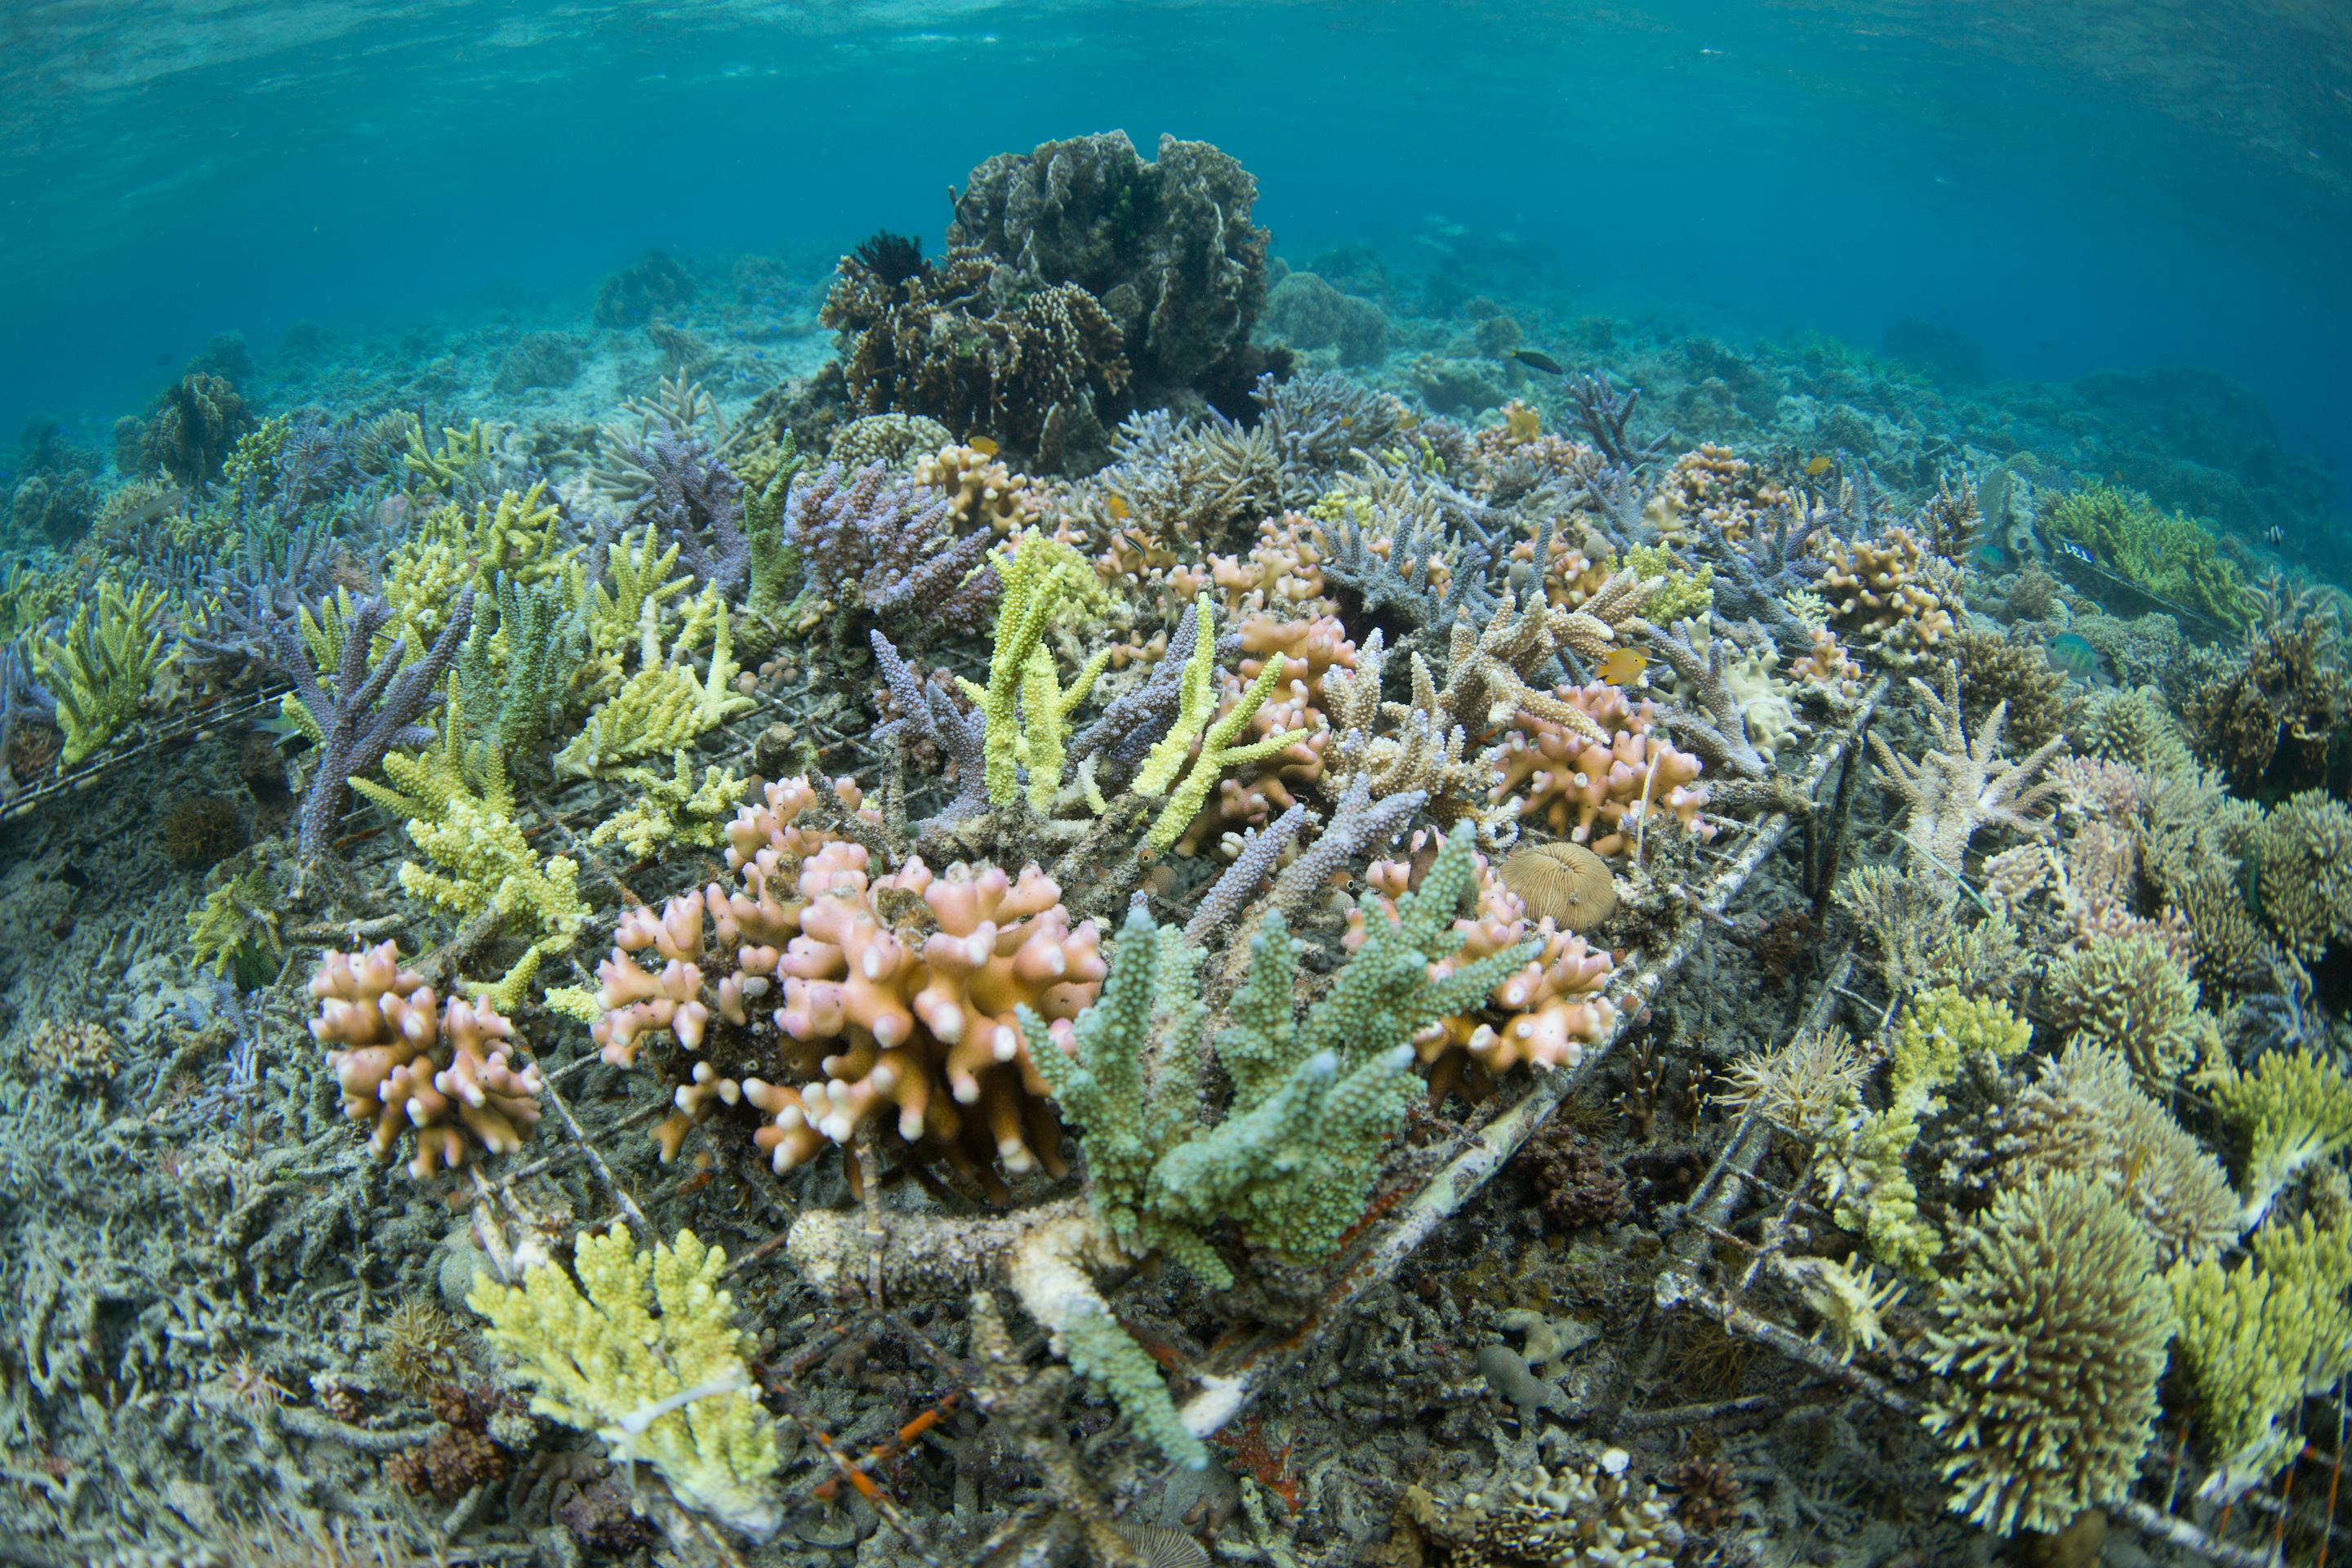 Underwater view of sponge creatures and corals (Image: Martin Colognoli/Ocean Image Bank)